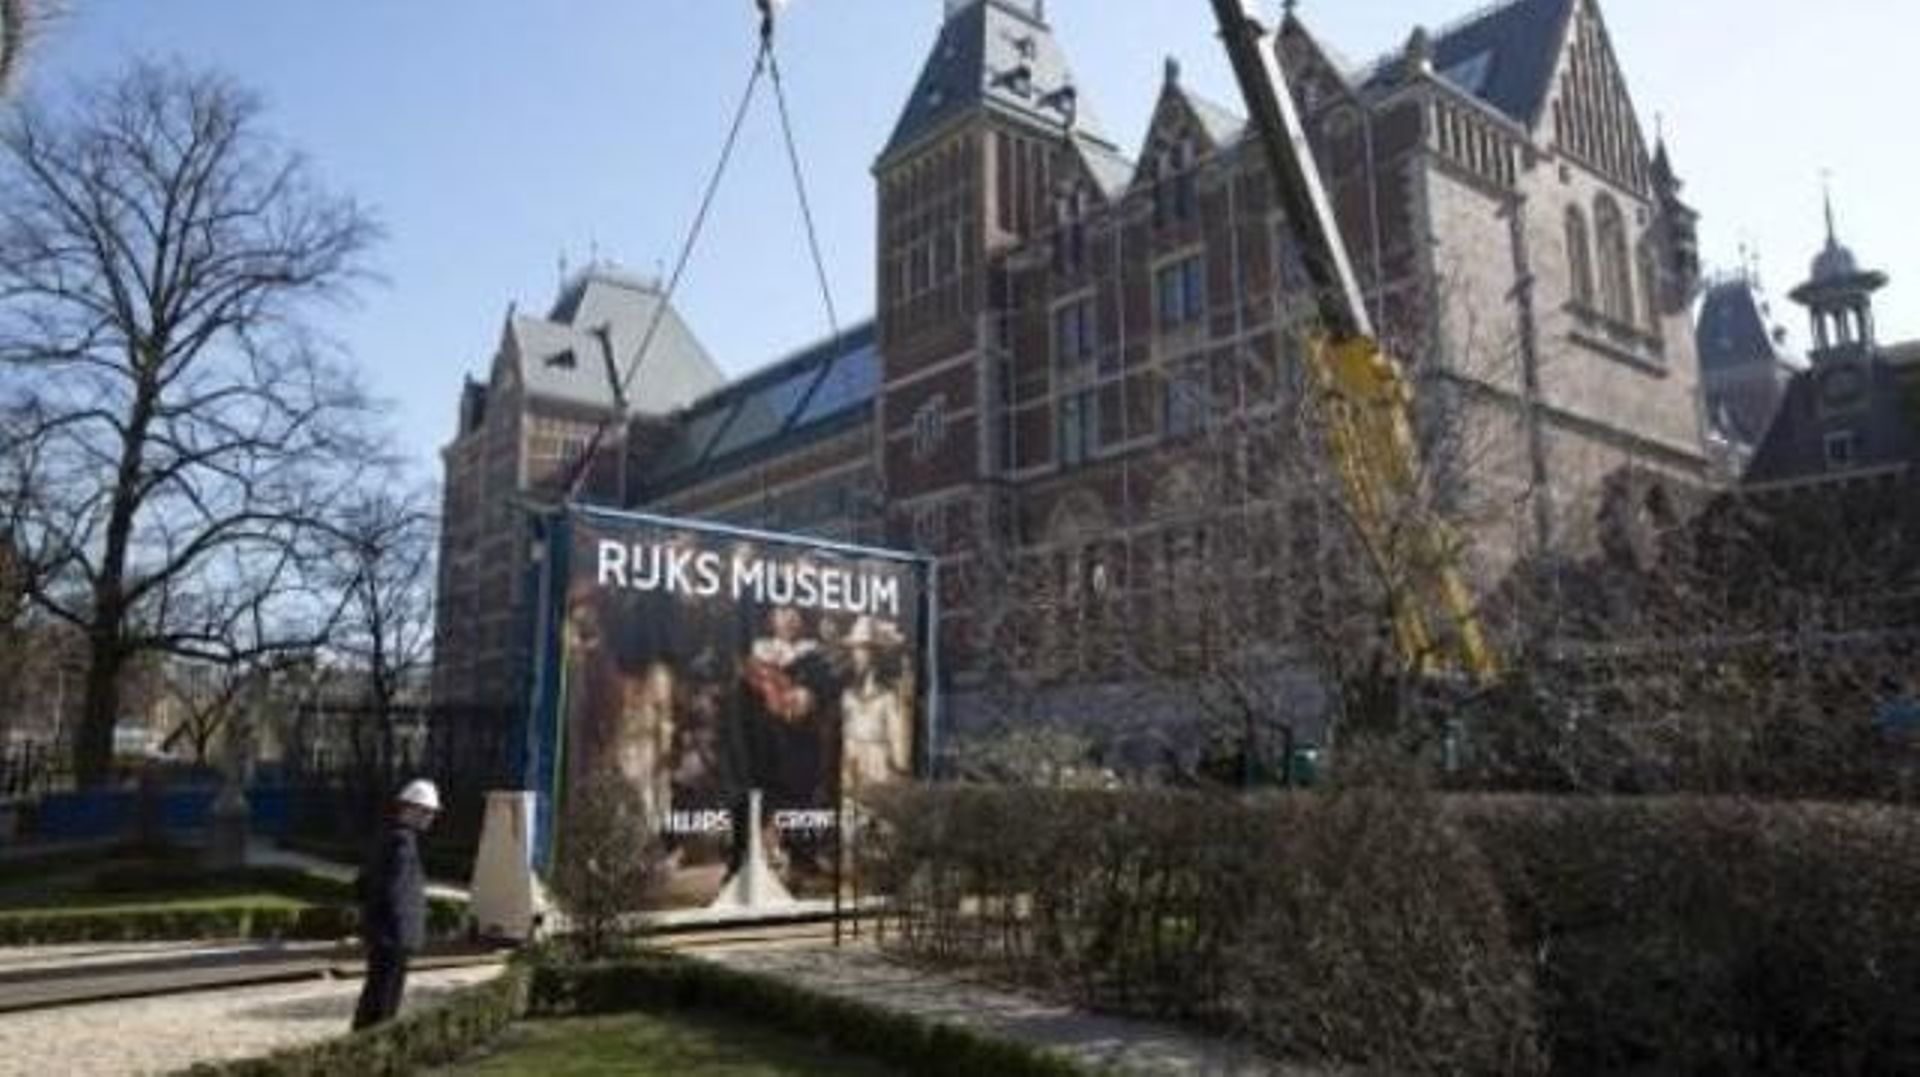 le-rijksmuseum-d-amsterdam-elu-musee-europeen-de-l-annee